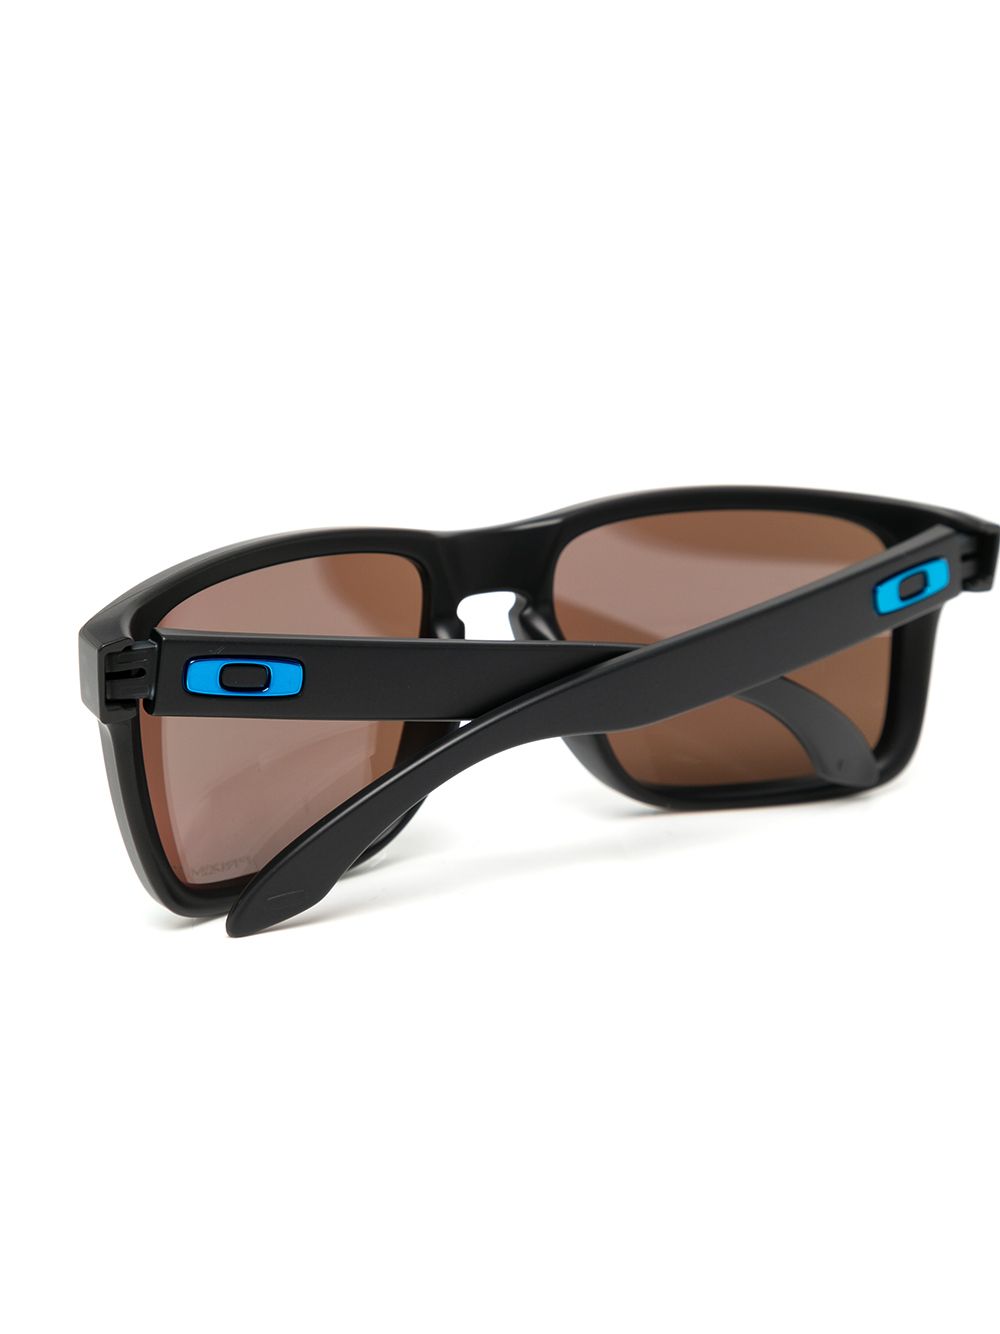 фото Oakley солнцезащитные очки holbrook в квадратной оправе